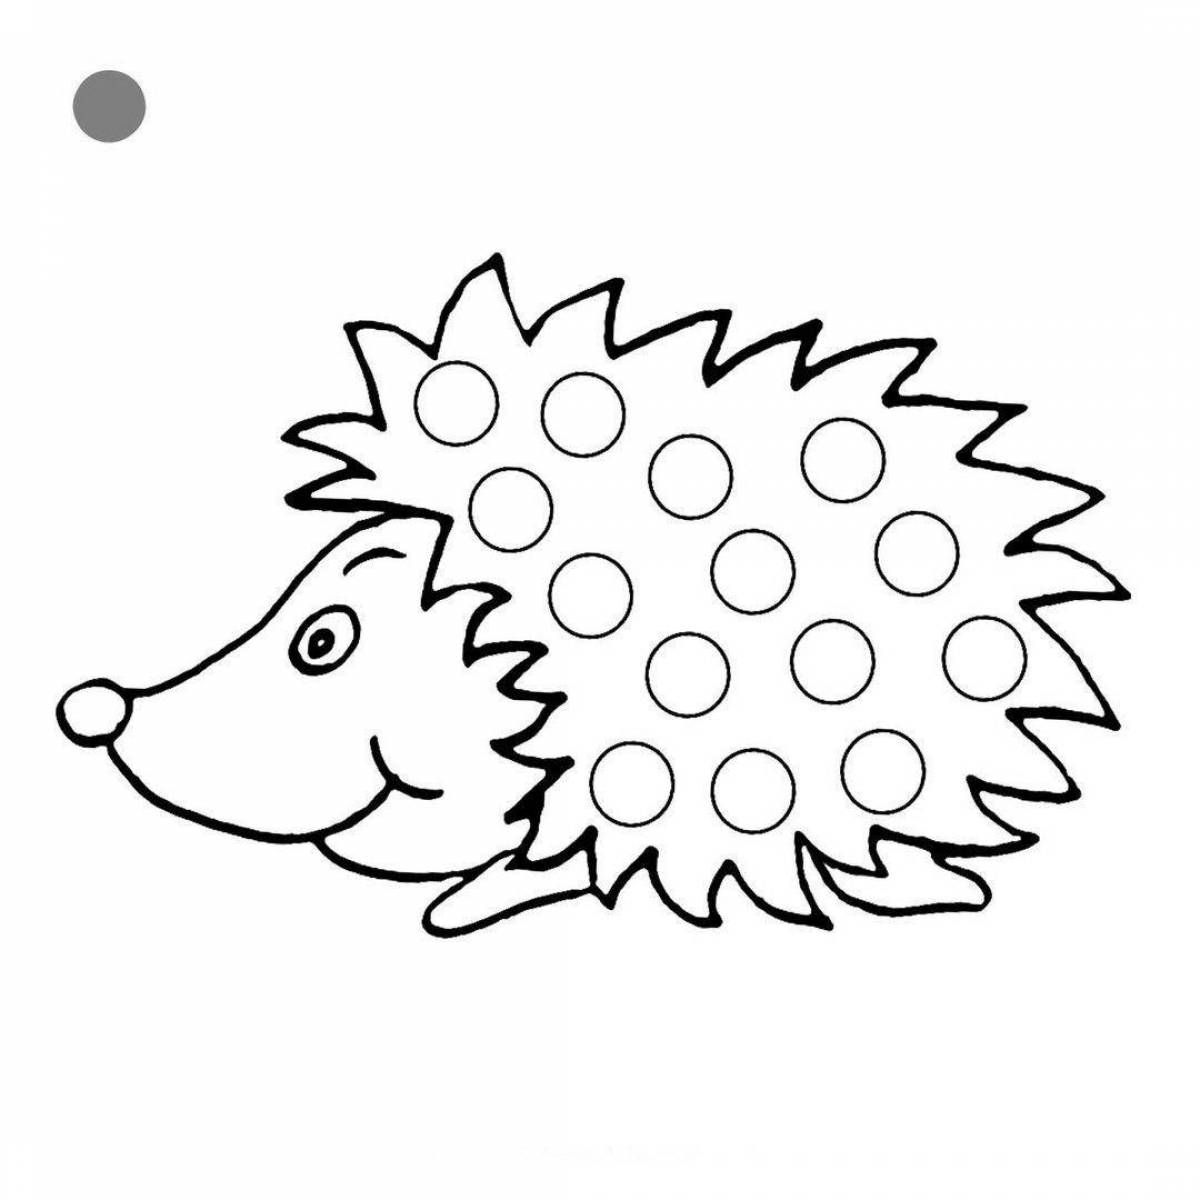 Funny hedgehog drawing